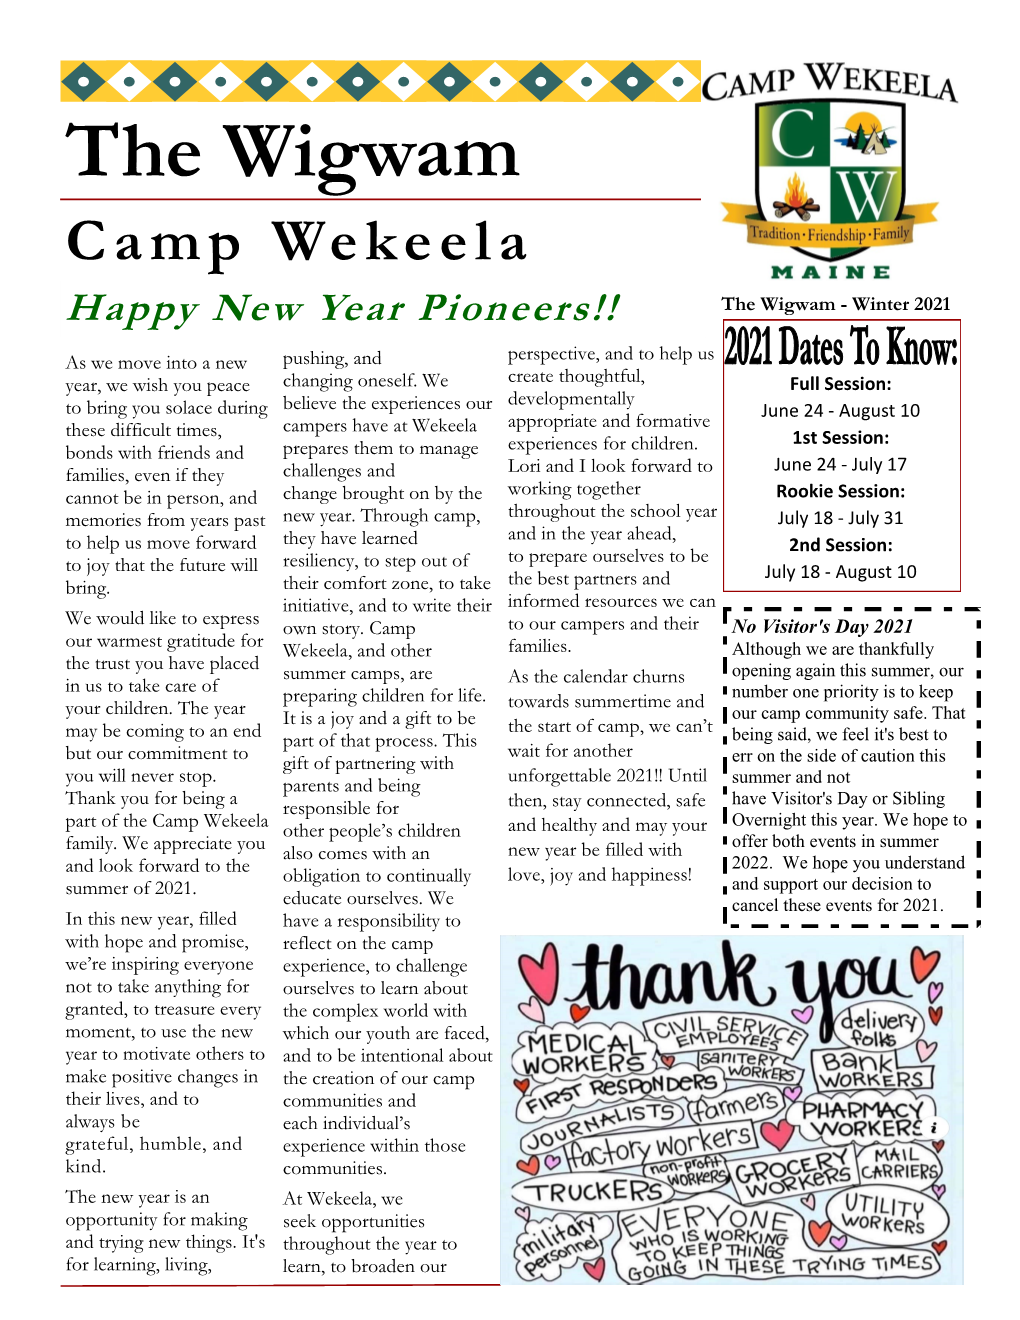 The Wigwam Camp Wekeela Happy New Year Pioneers!! the Wigwam - Winter 2021